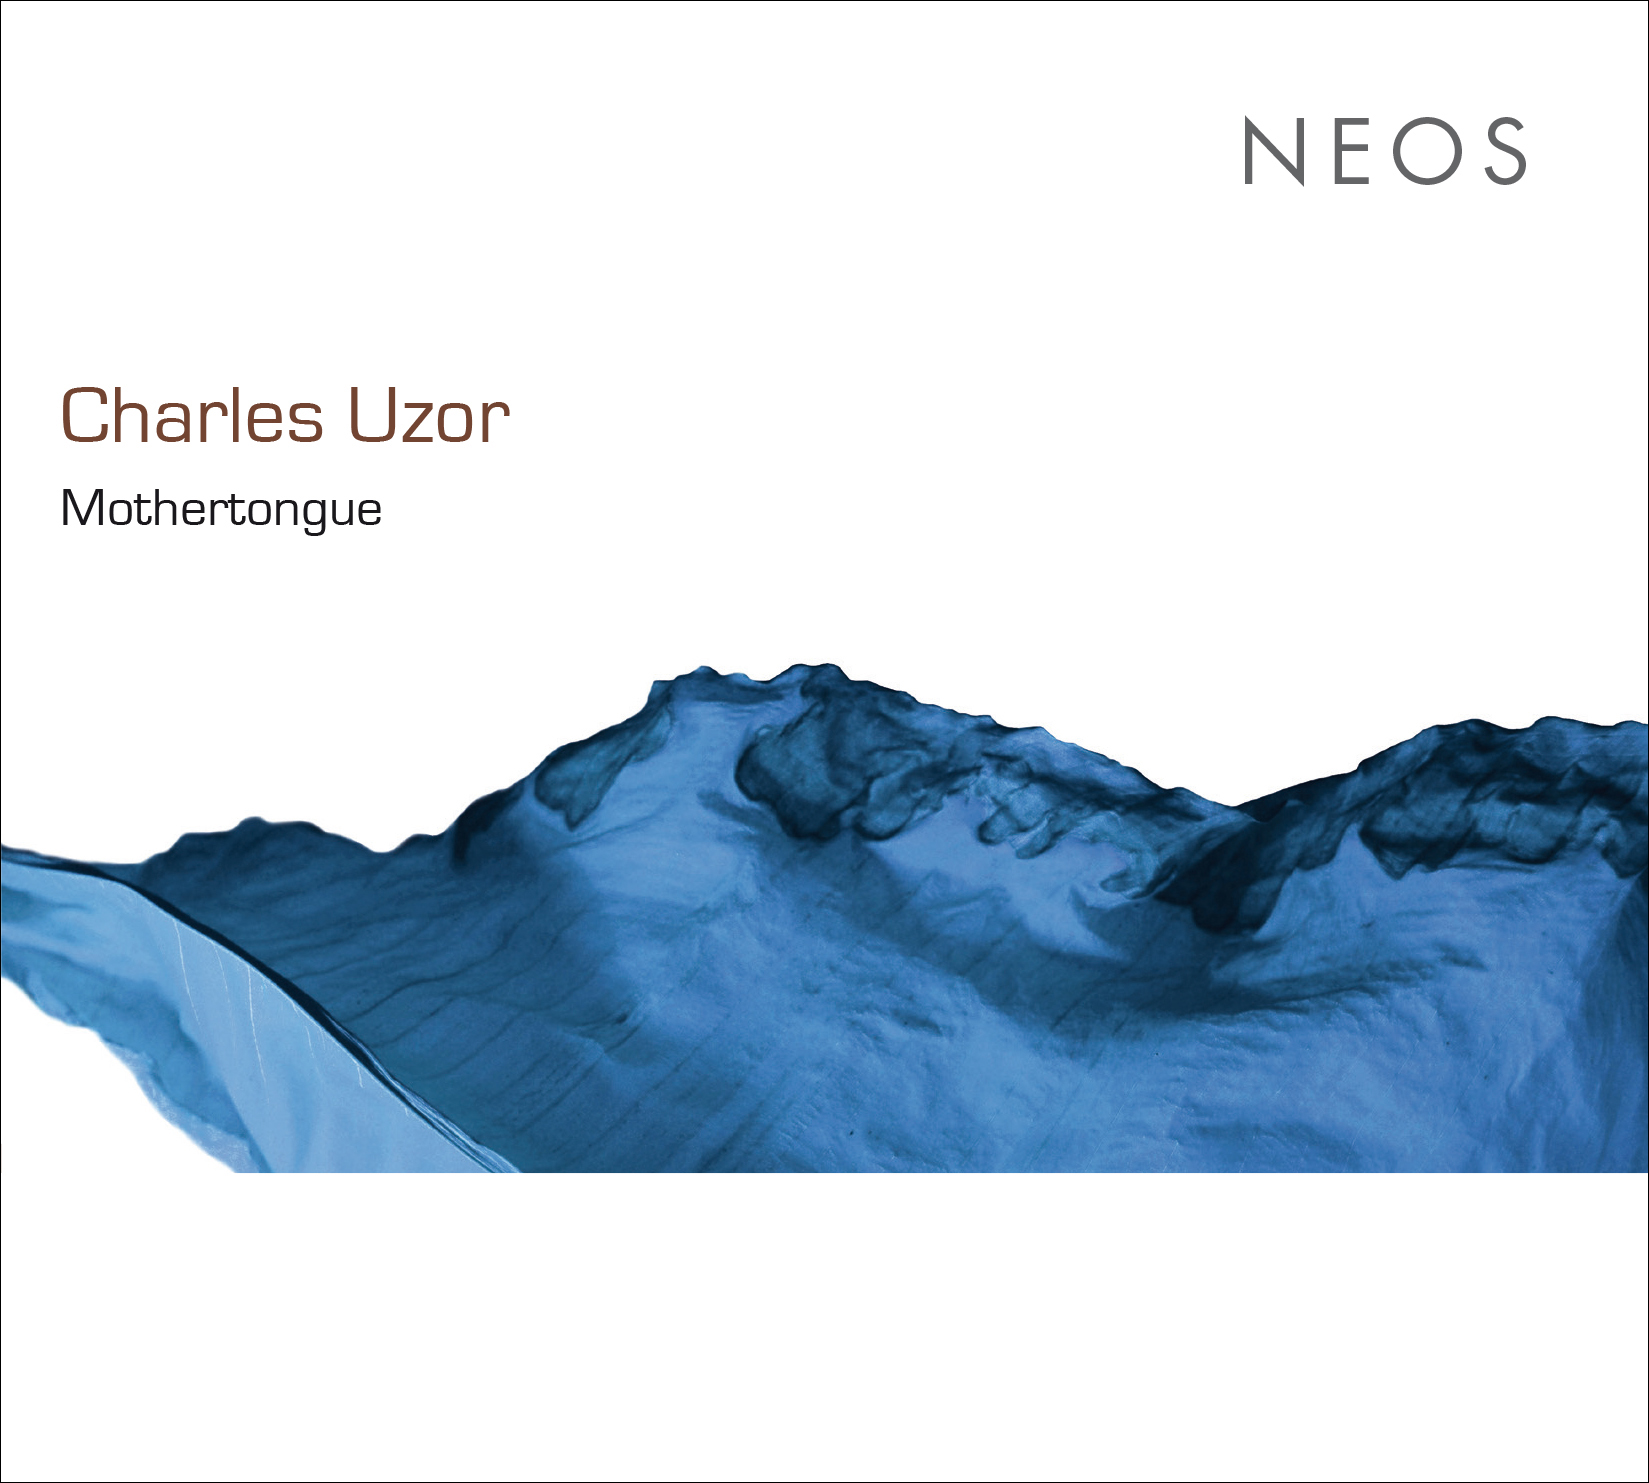 Novedades discográficas: «Charles Uzor Mothertongue» editado en Neos Music